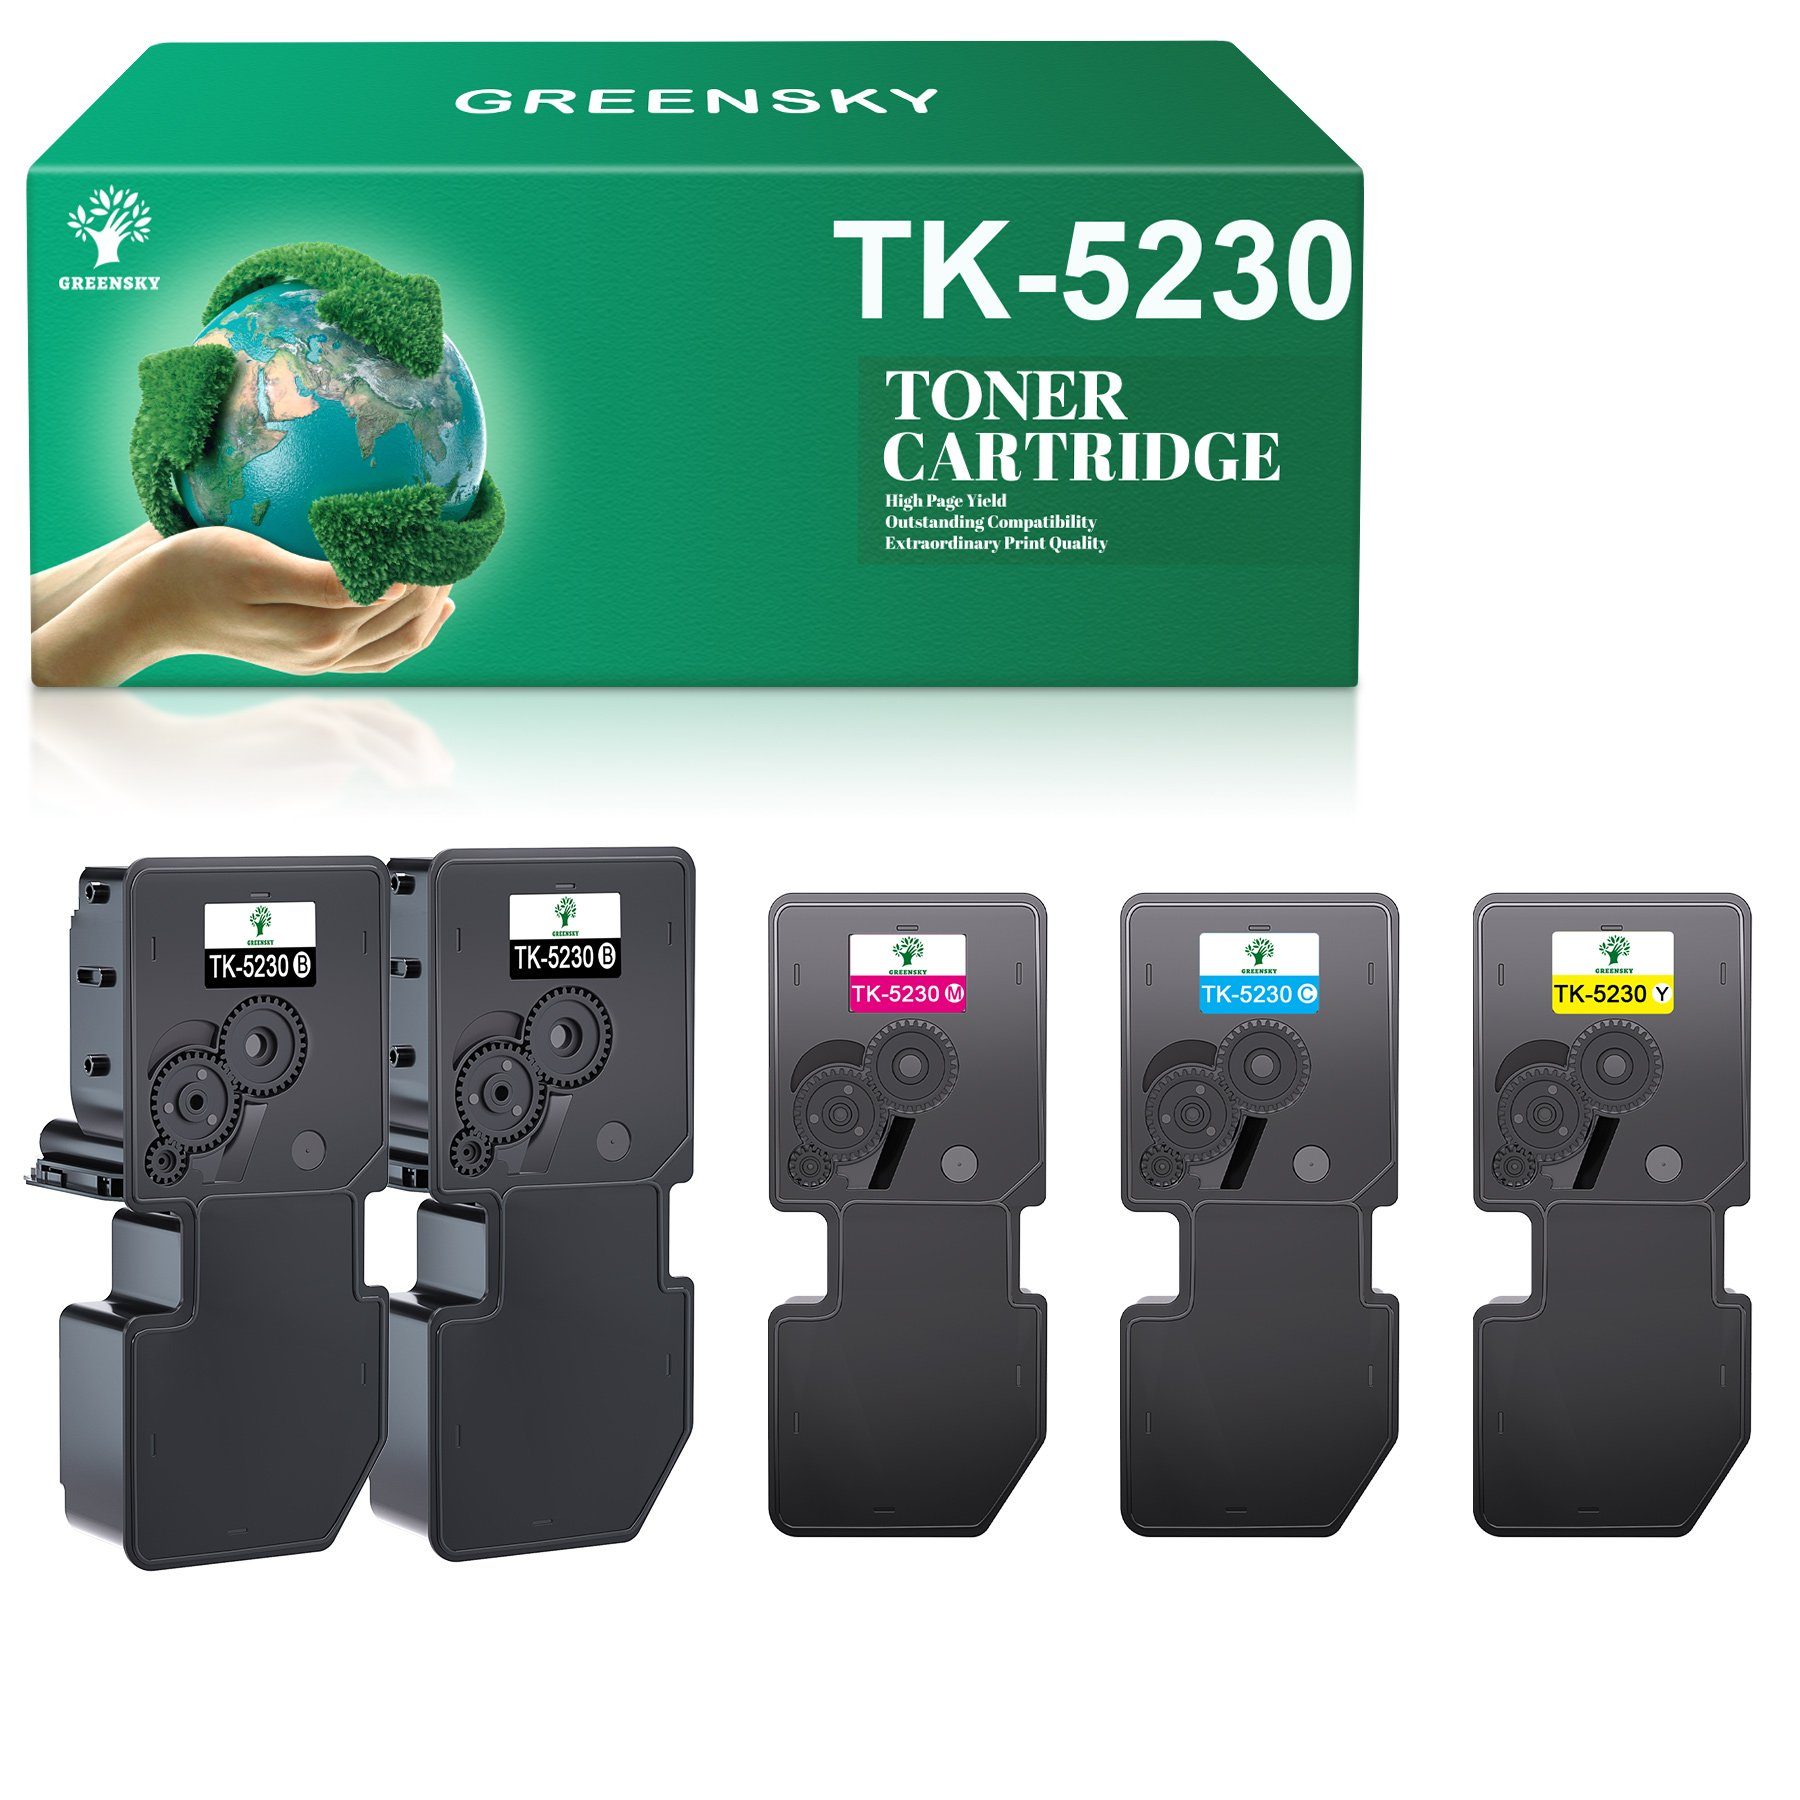 TK5230 P5021CDW Tonerkartusche M5521CDN Kyocera TK-5230C 5er Tonerpatrone TK-5230, für TK-5230M ECOSYS M5521CDW Ersatz für (TK-5230K TK-5230Y), Greensky P5021CDN als